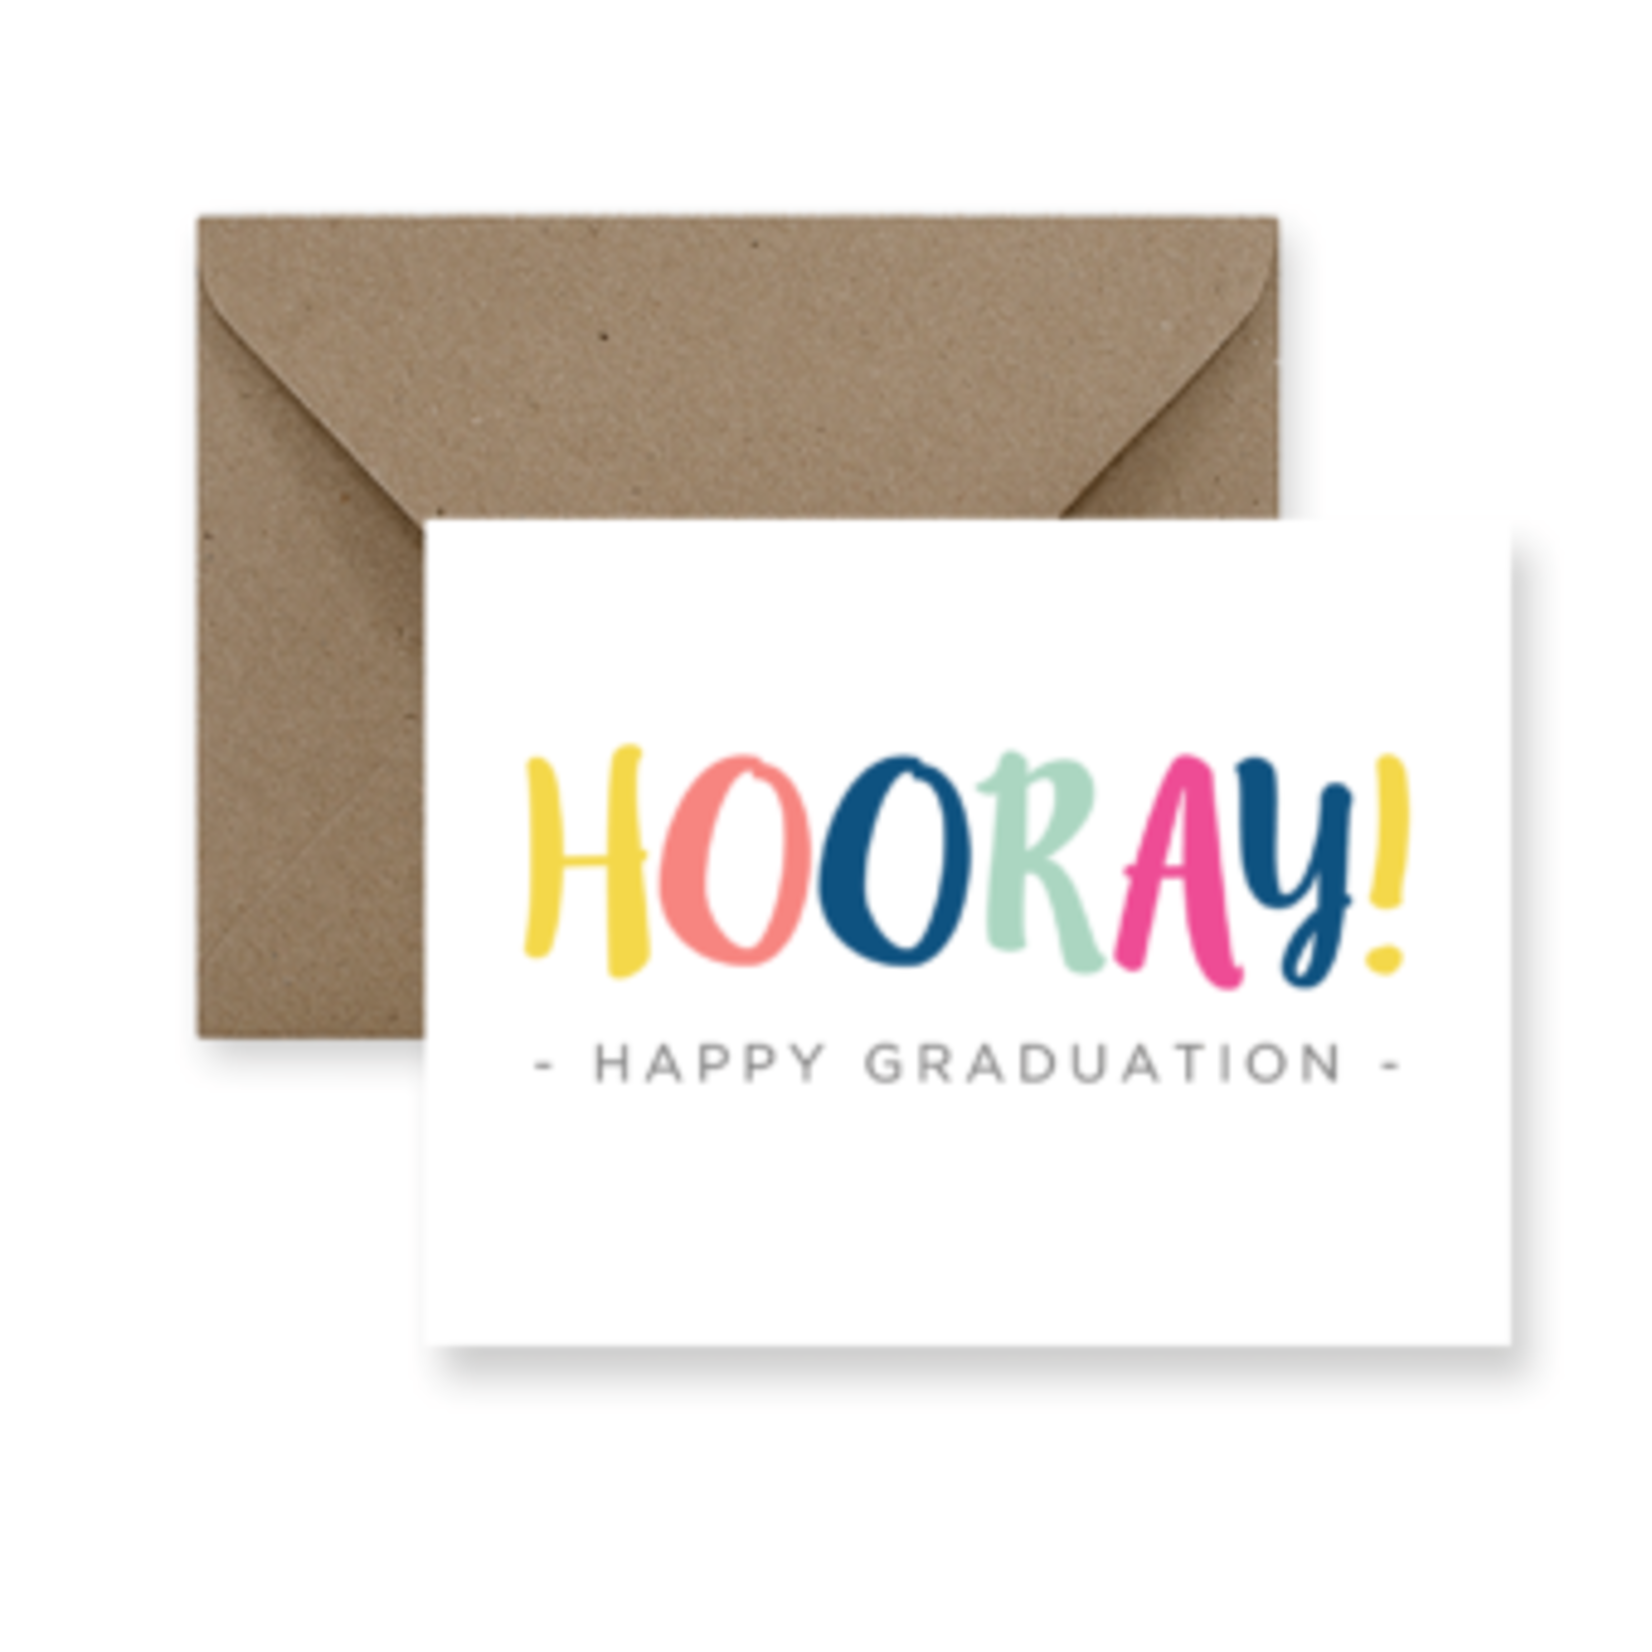 Hooray! Graduation Card